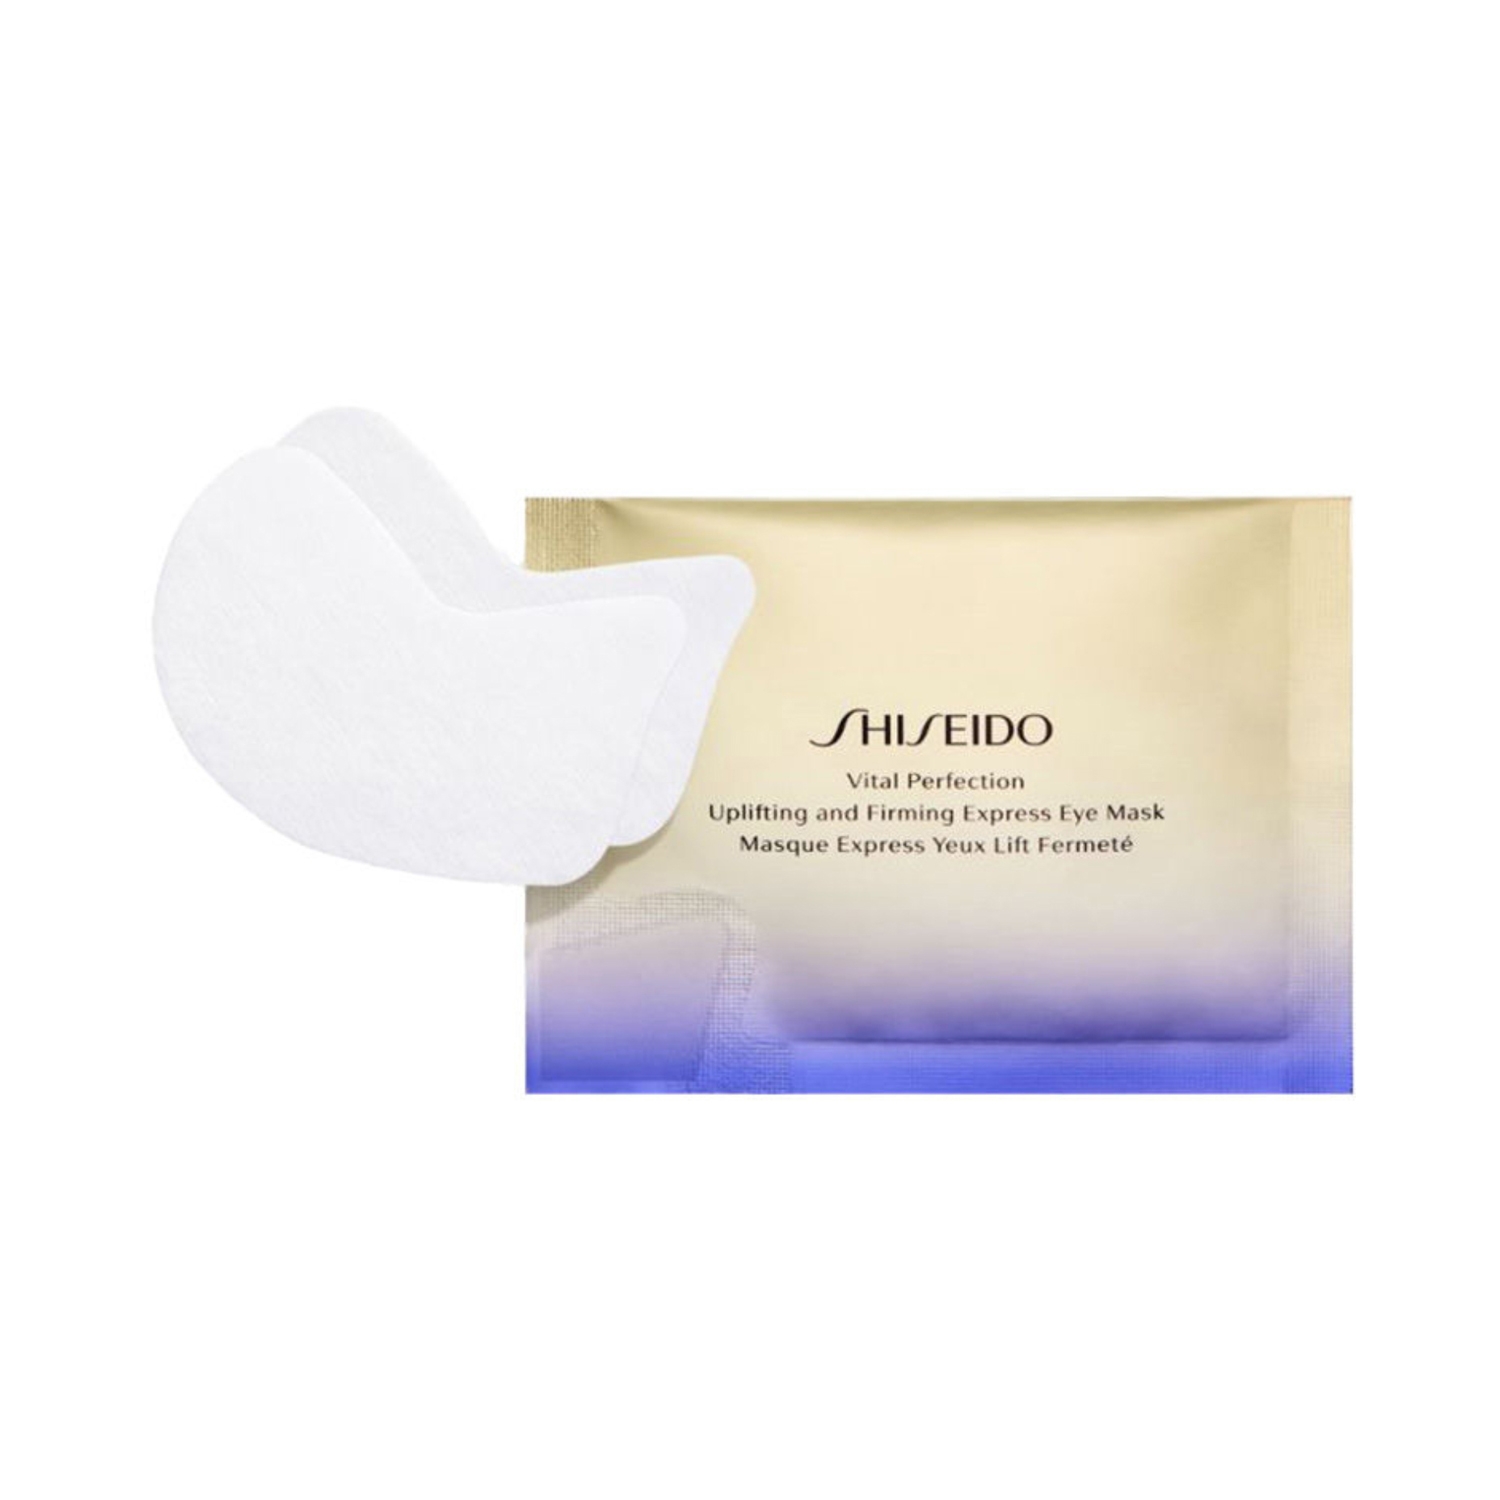 Shiseido Vital Perfection Uplifting and Firming Express Eye Mask (1 Pair)